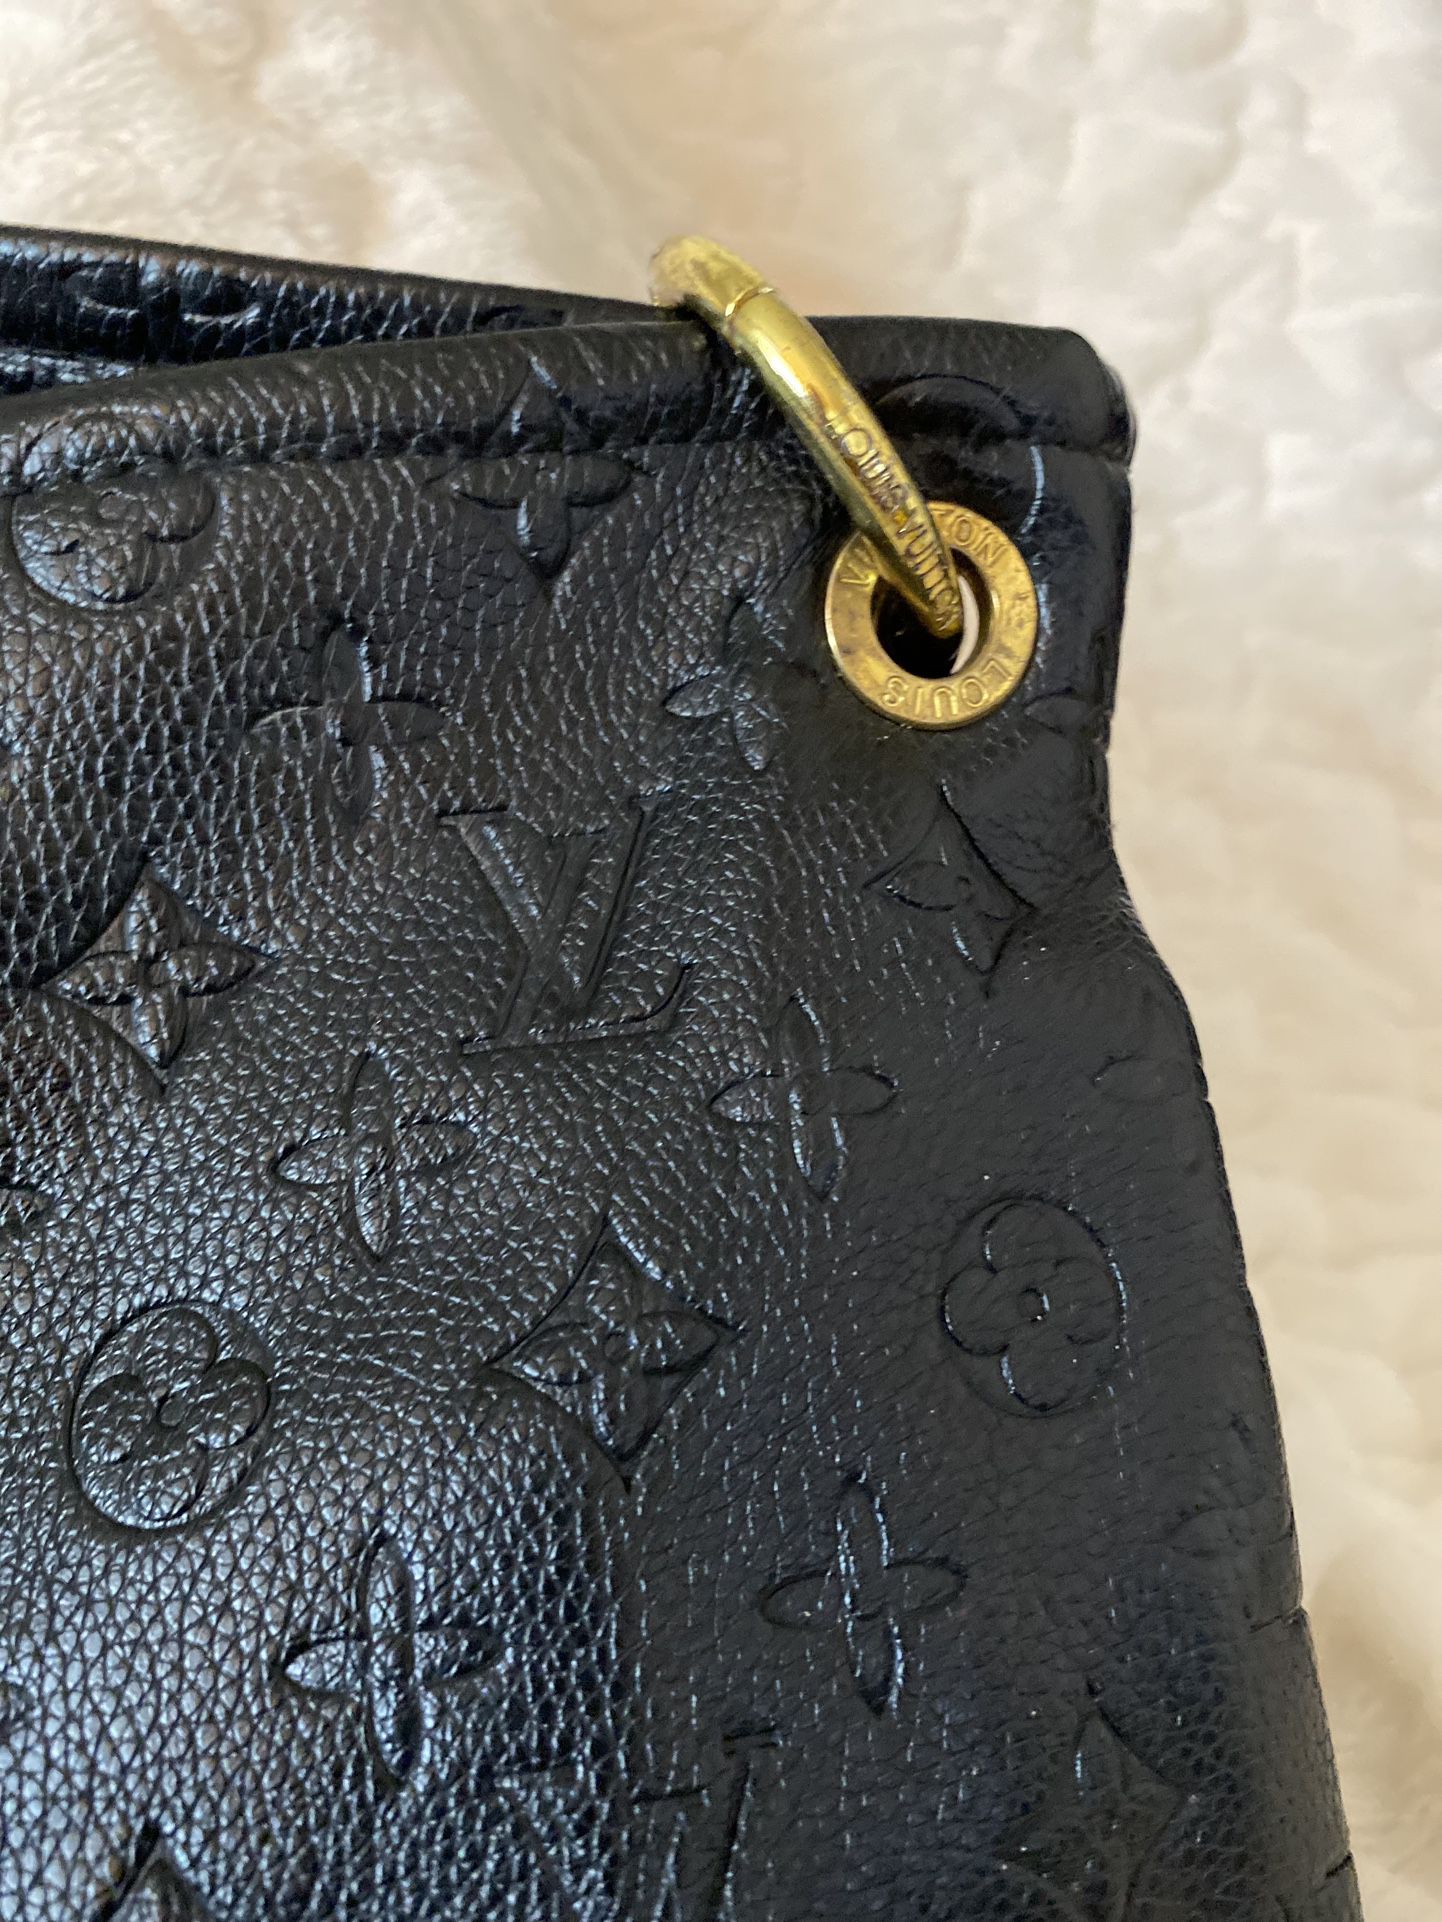 Louis Vuitton LV Empreinte Artsy Black Bag for Sale in Huntington Beach, CA  - OfferUp